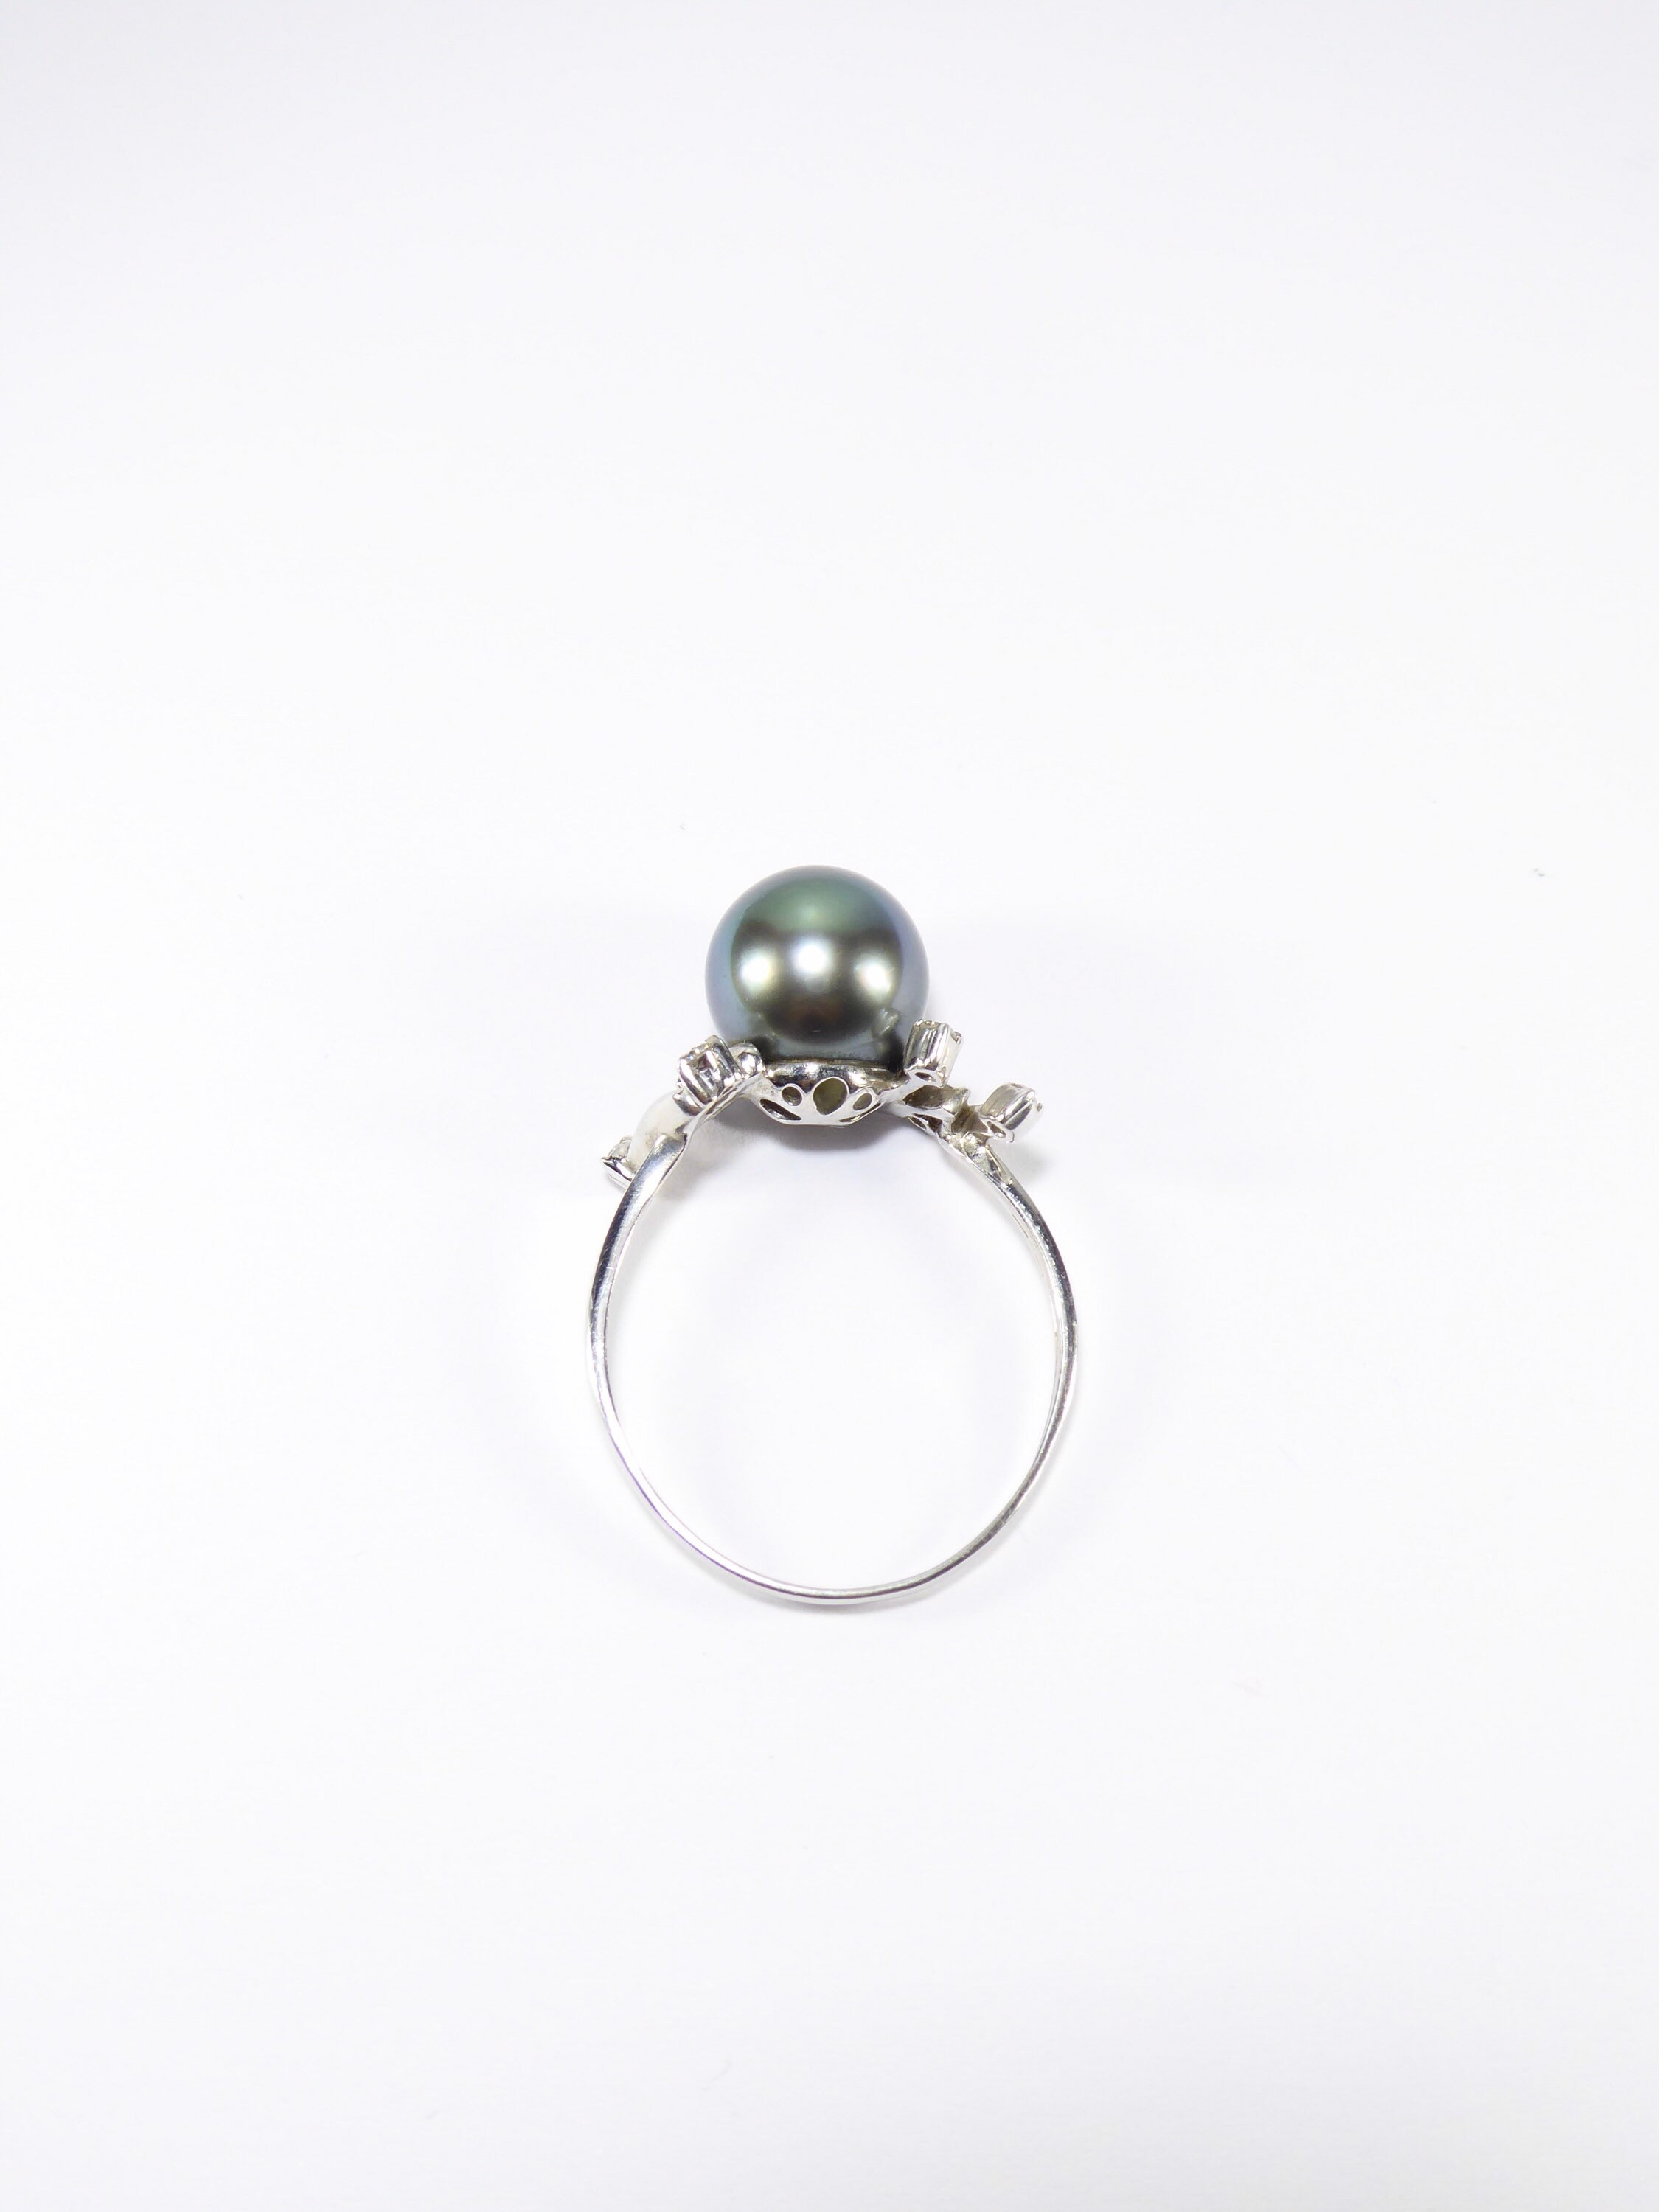 Unique British Vintage 9mm Haitian Pearl & Diamond Ring 9k | Etsy